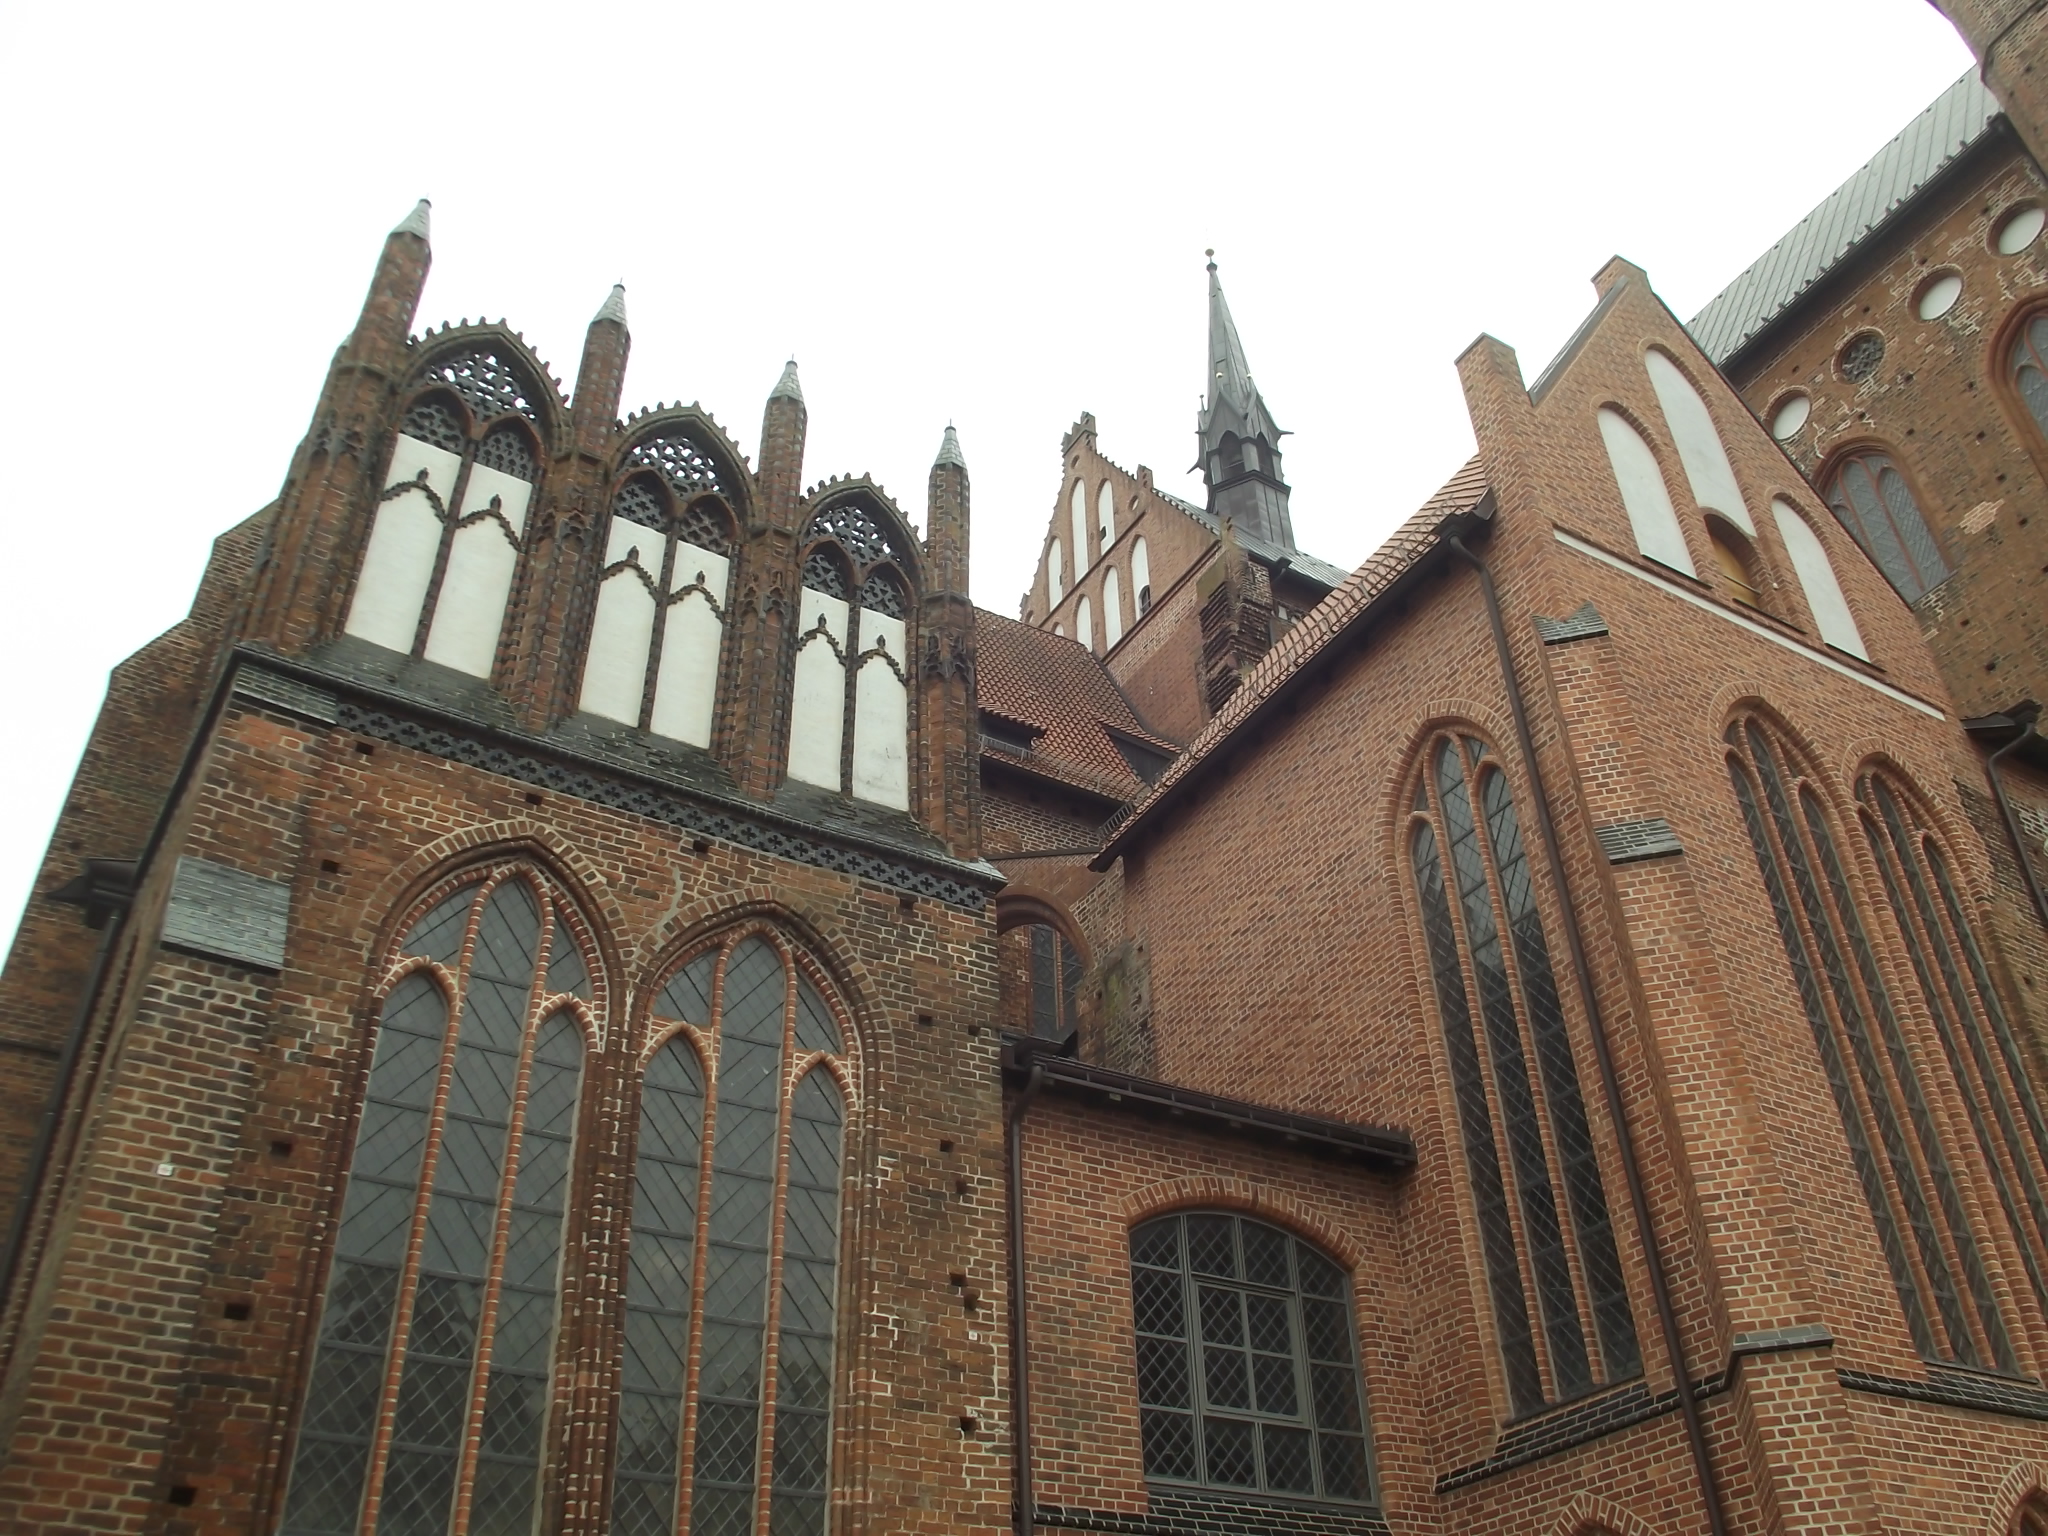 St. Georgen Kirche in Wismar